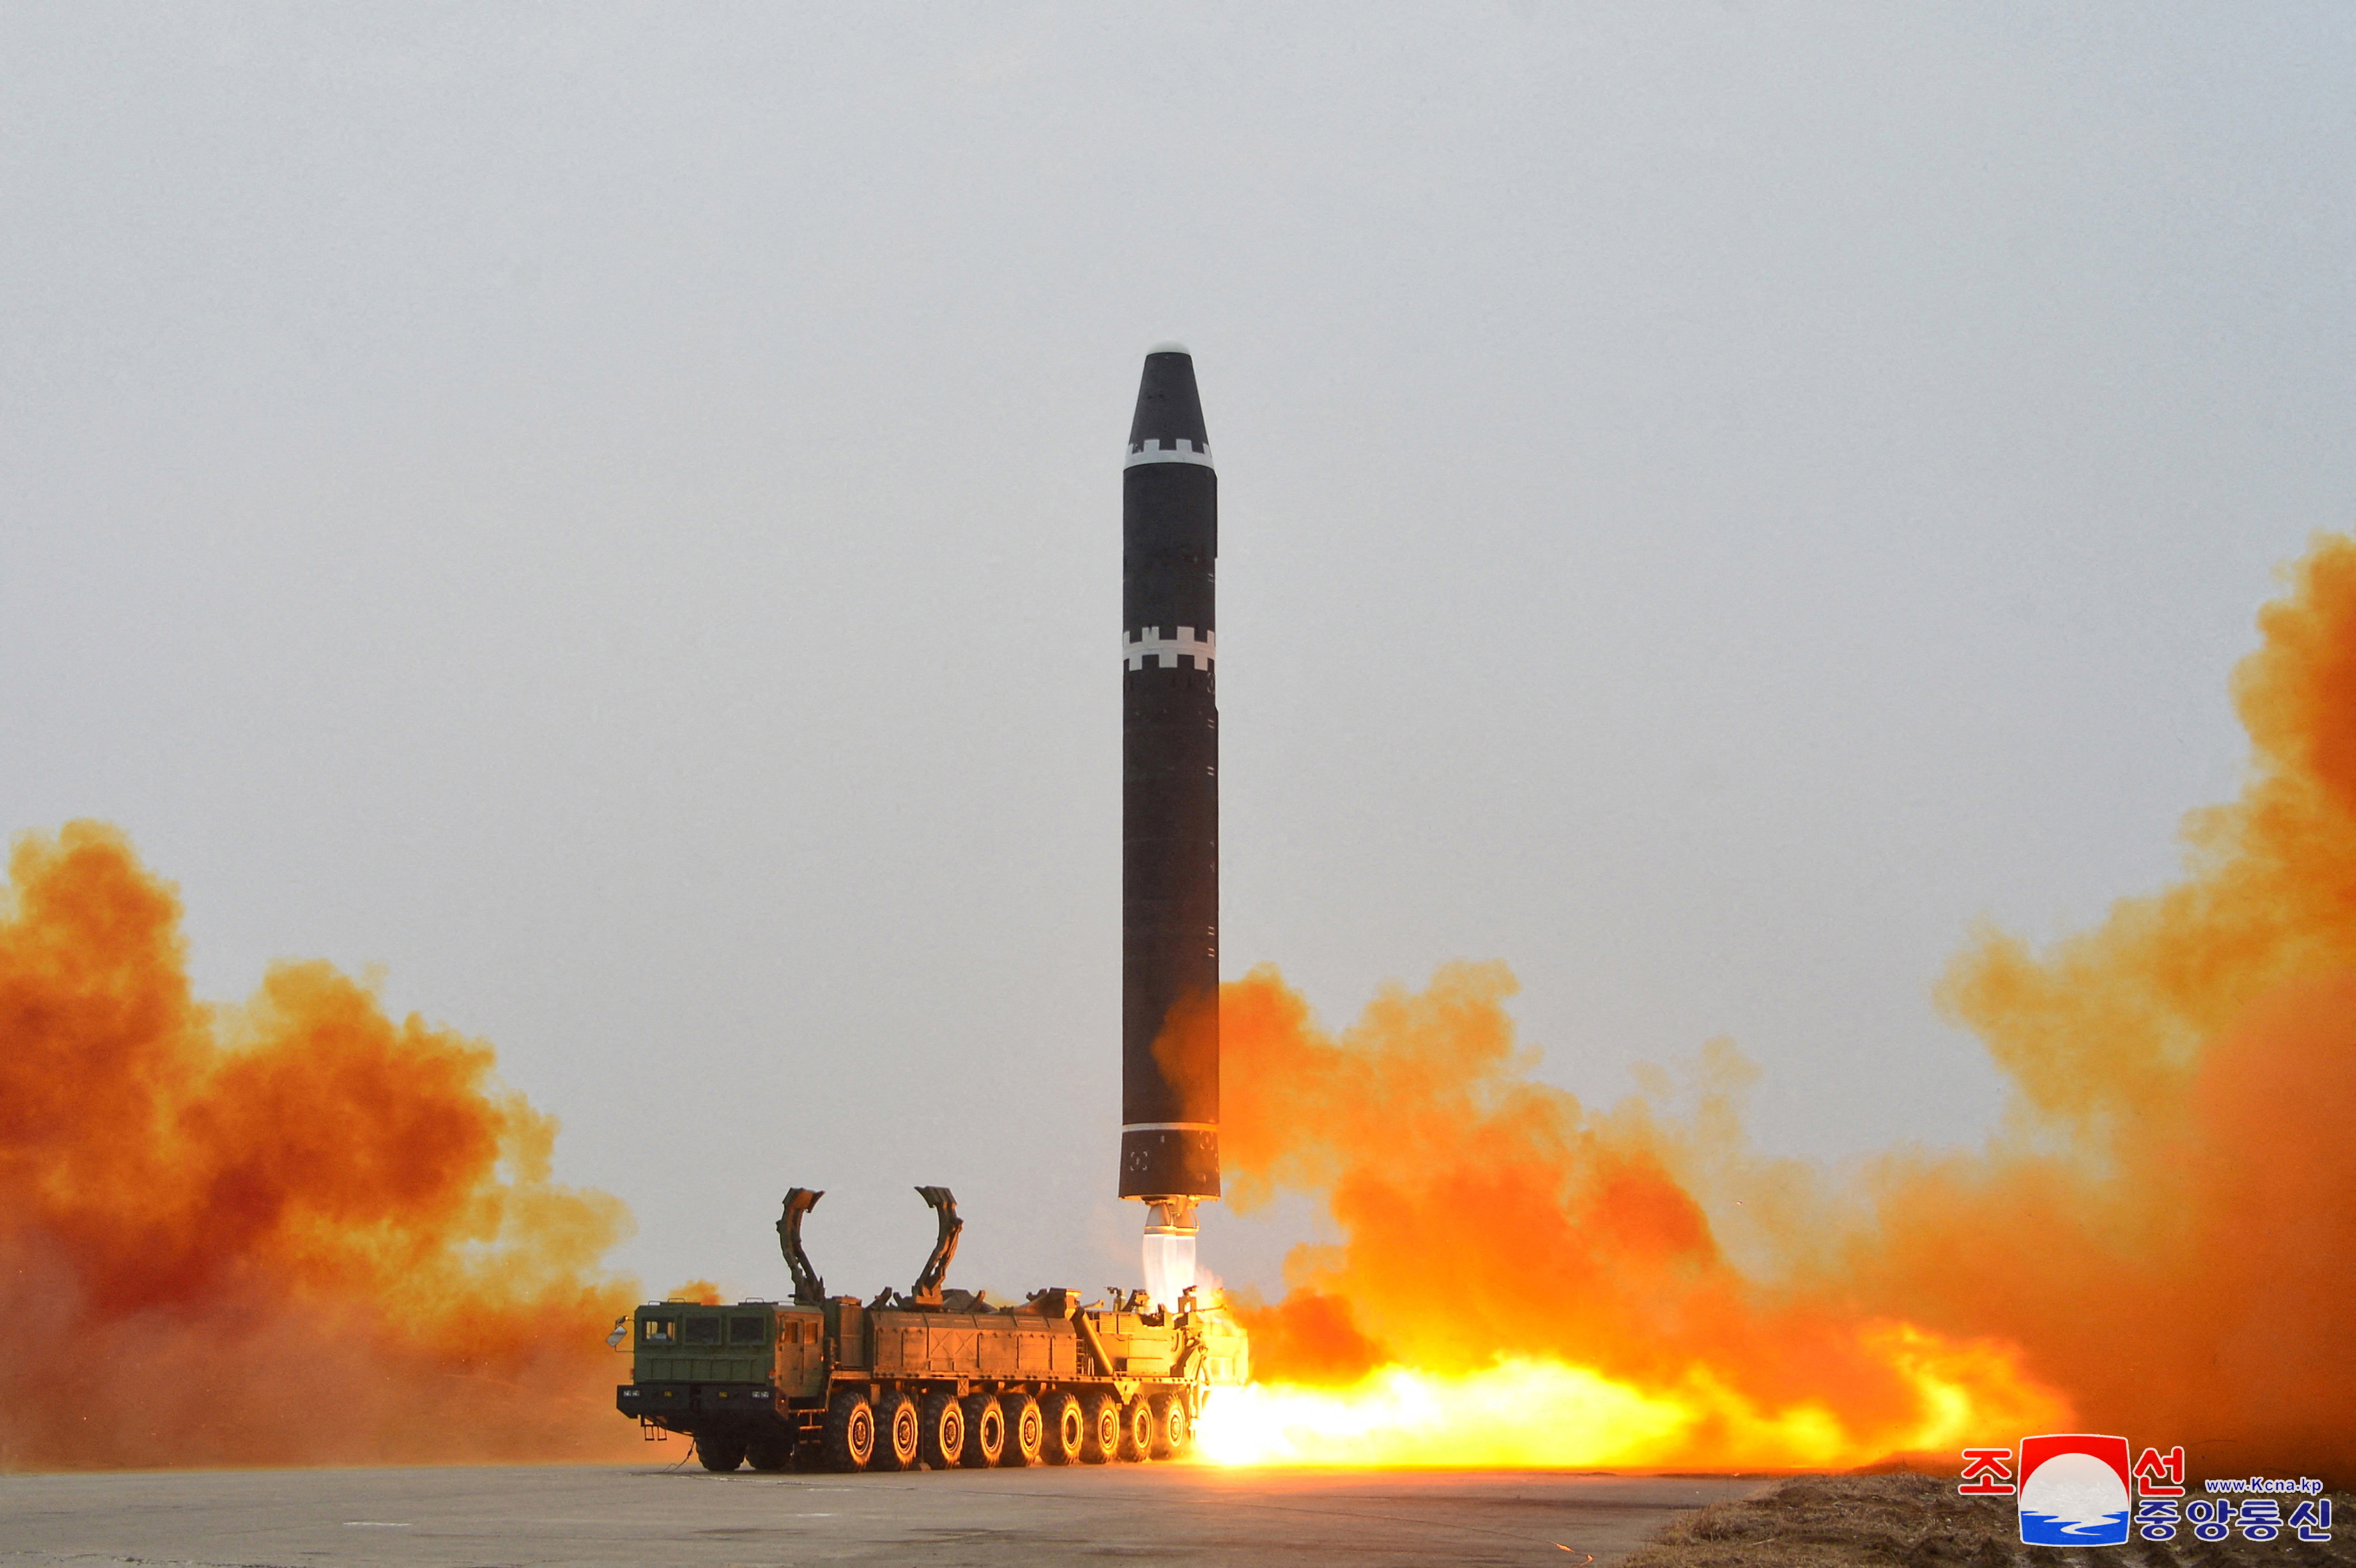 Hwasong-15 intercontinental ballistic missile (ICBM) launched at Pyongyang International Airport